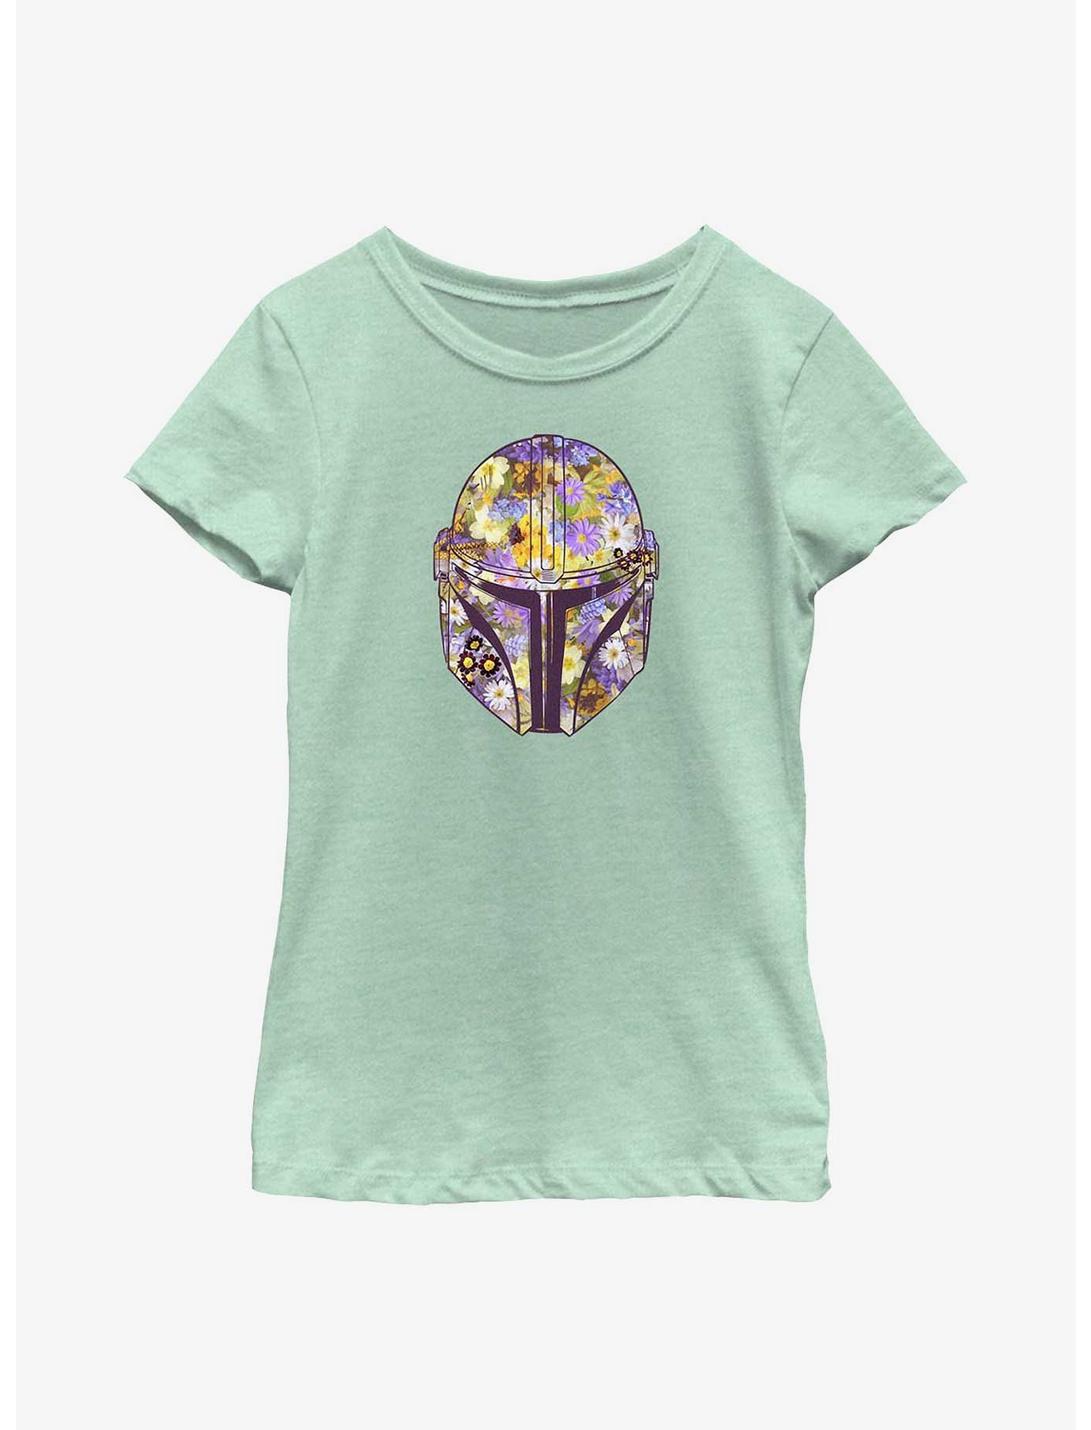 Star Wars The Mandalorian Floral Helmet Youth Girls T-Shirt, MINT, hi-res